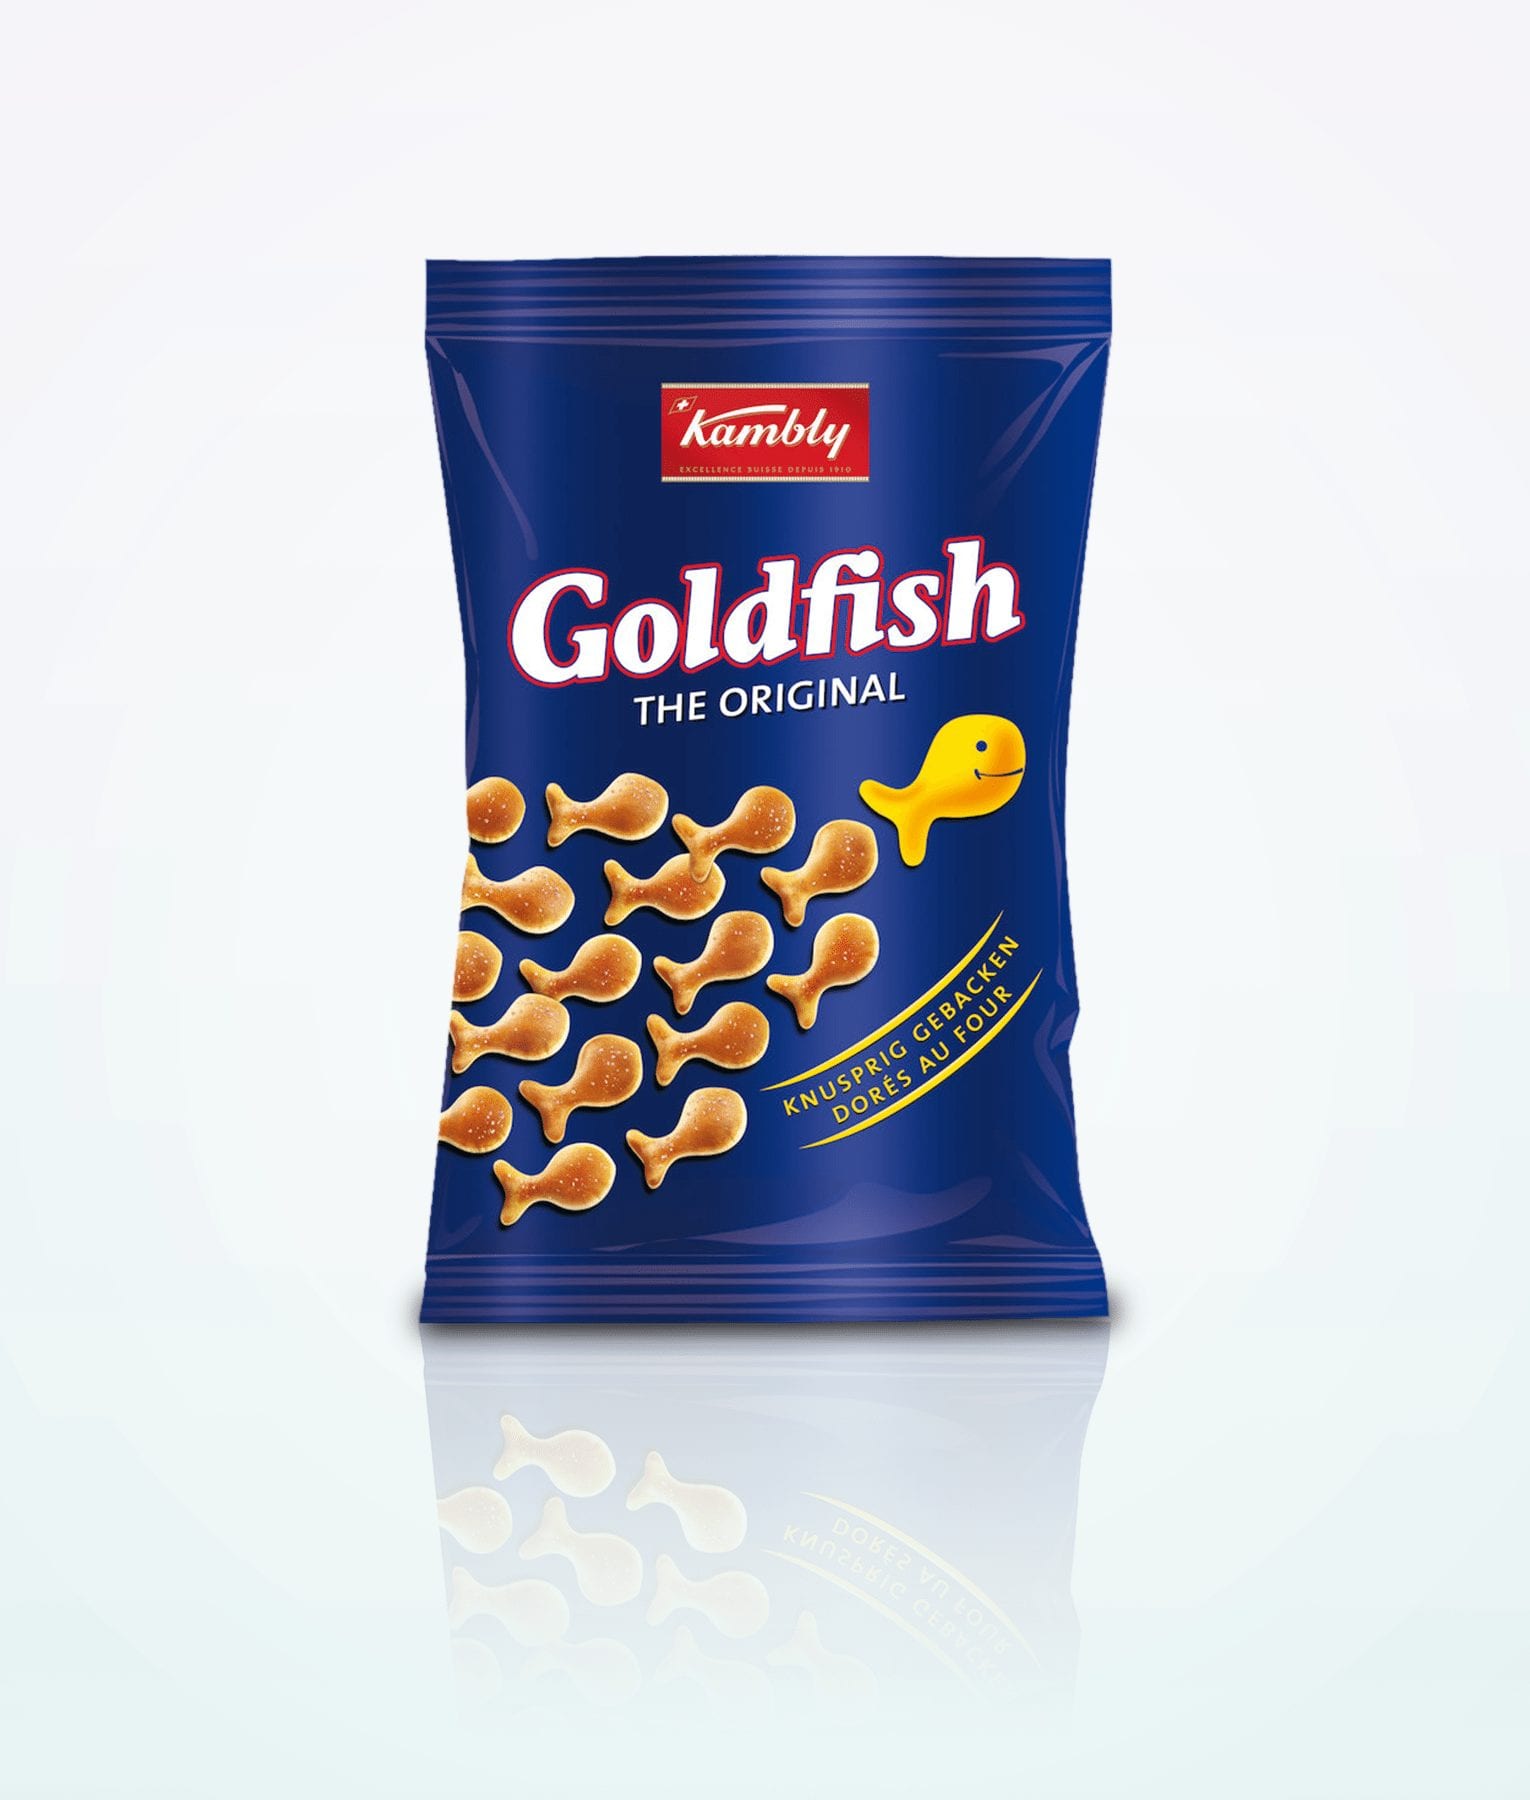 Kambly-original-Swiss-gold-fish-crackers